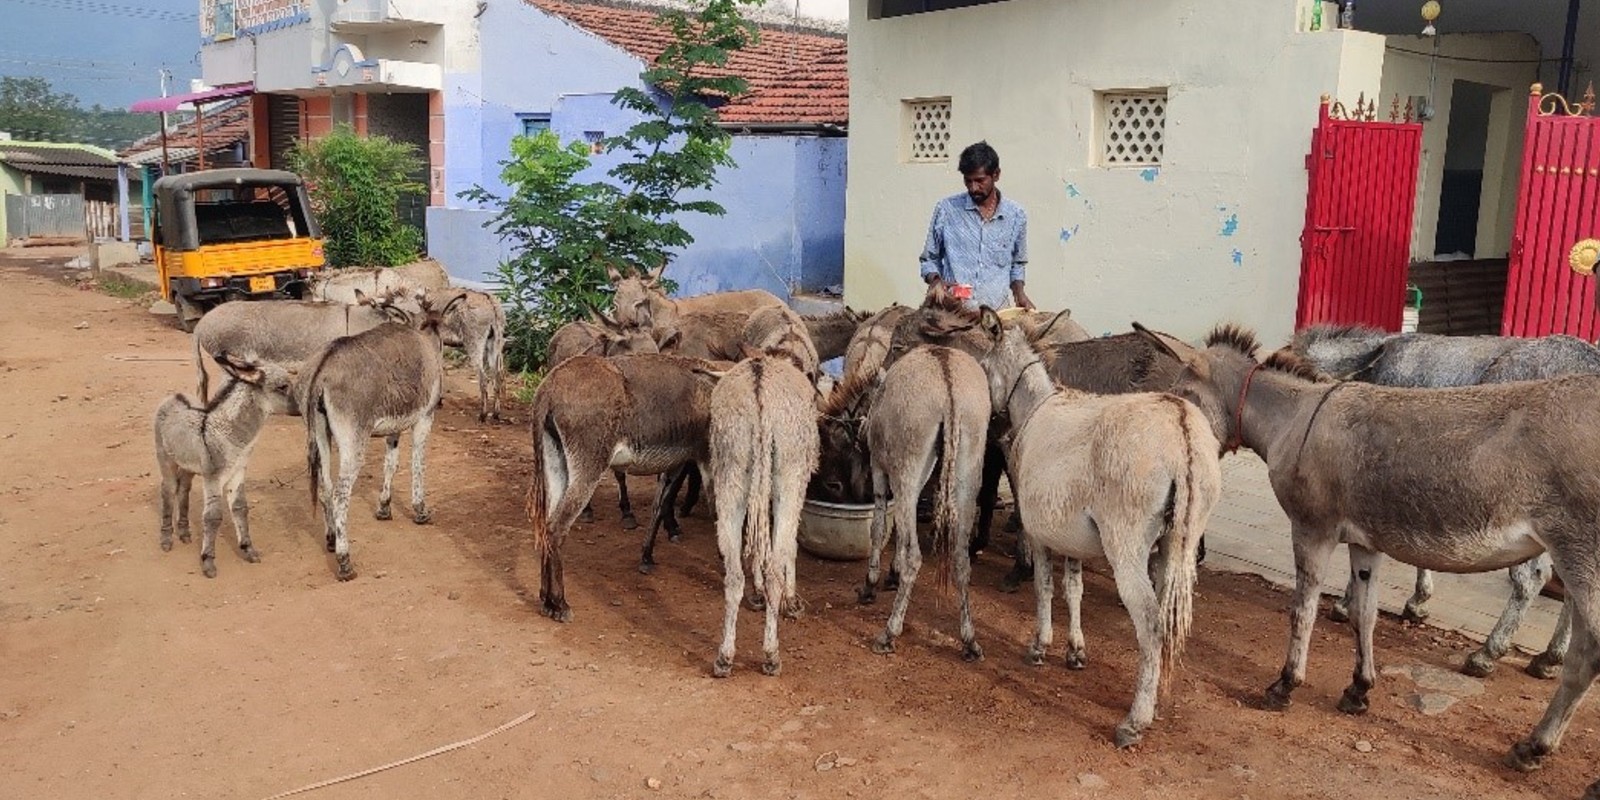 Donkeys in India